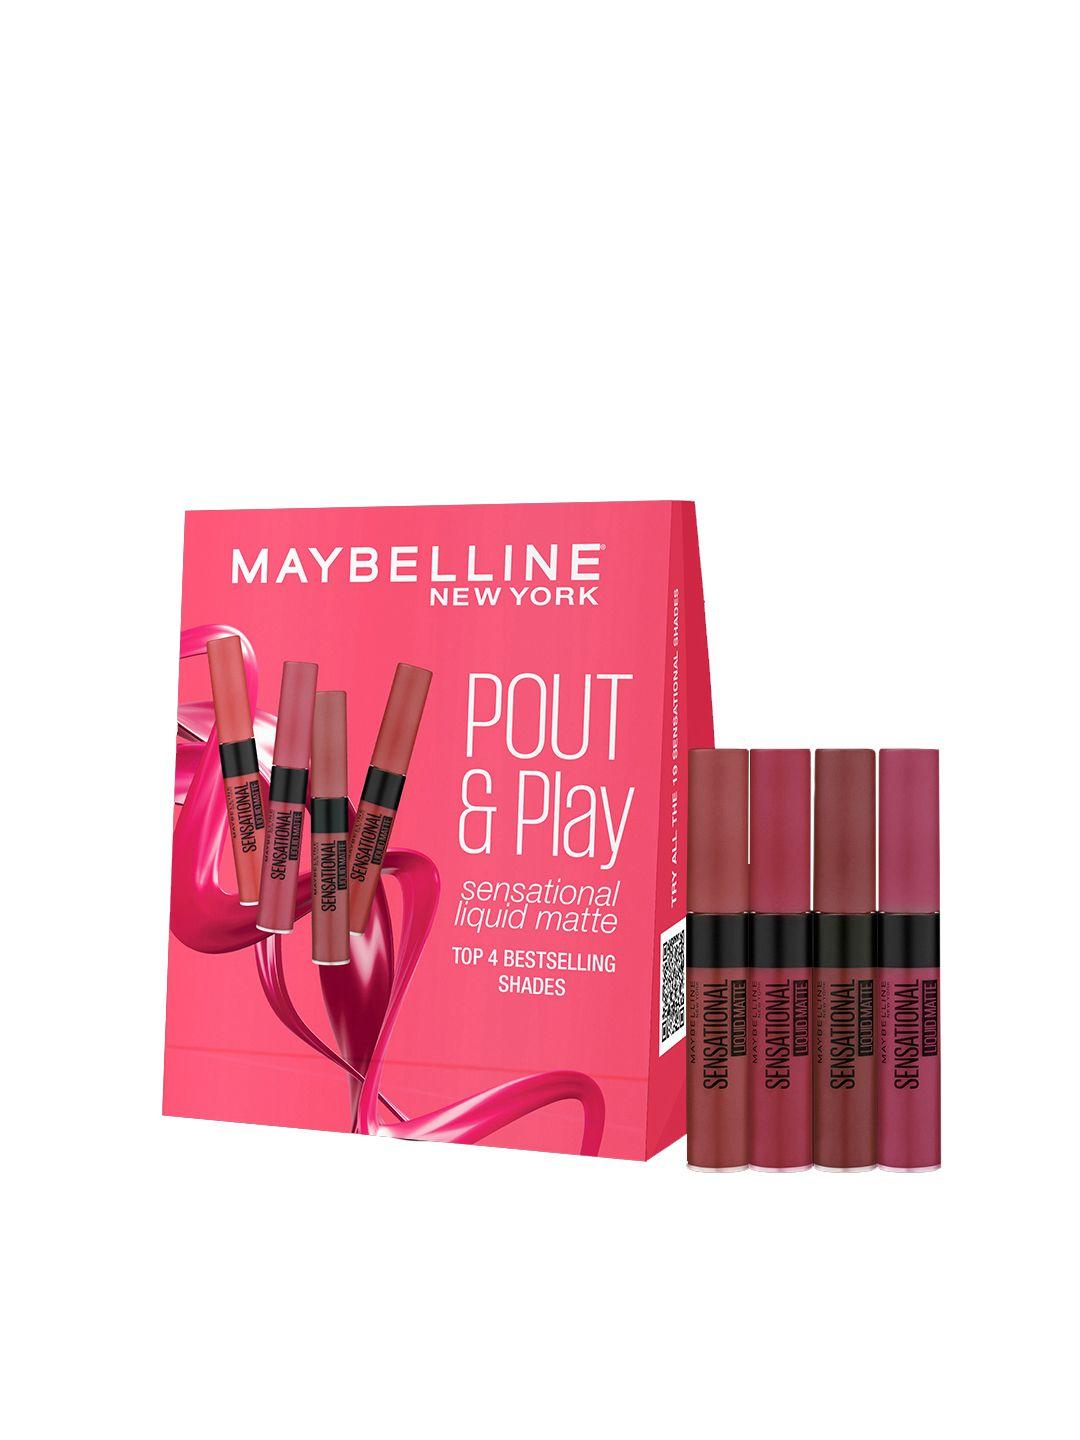 maybelline new york pout & play - set of 4 sensational liquid matte lipsticks - 7ml each